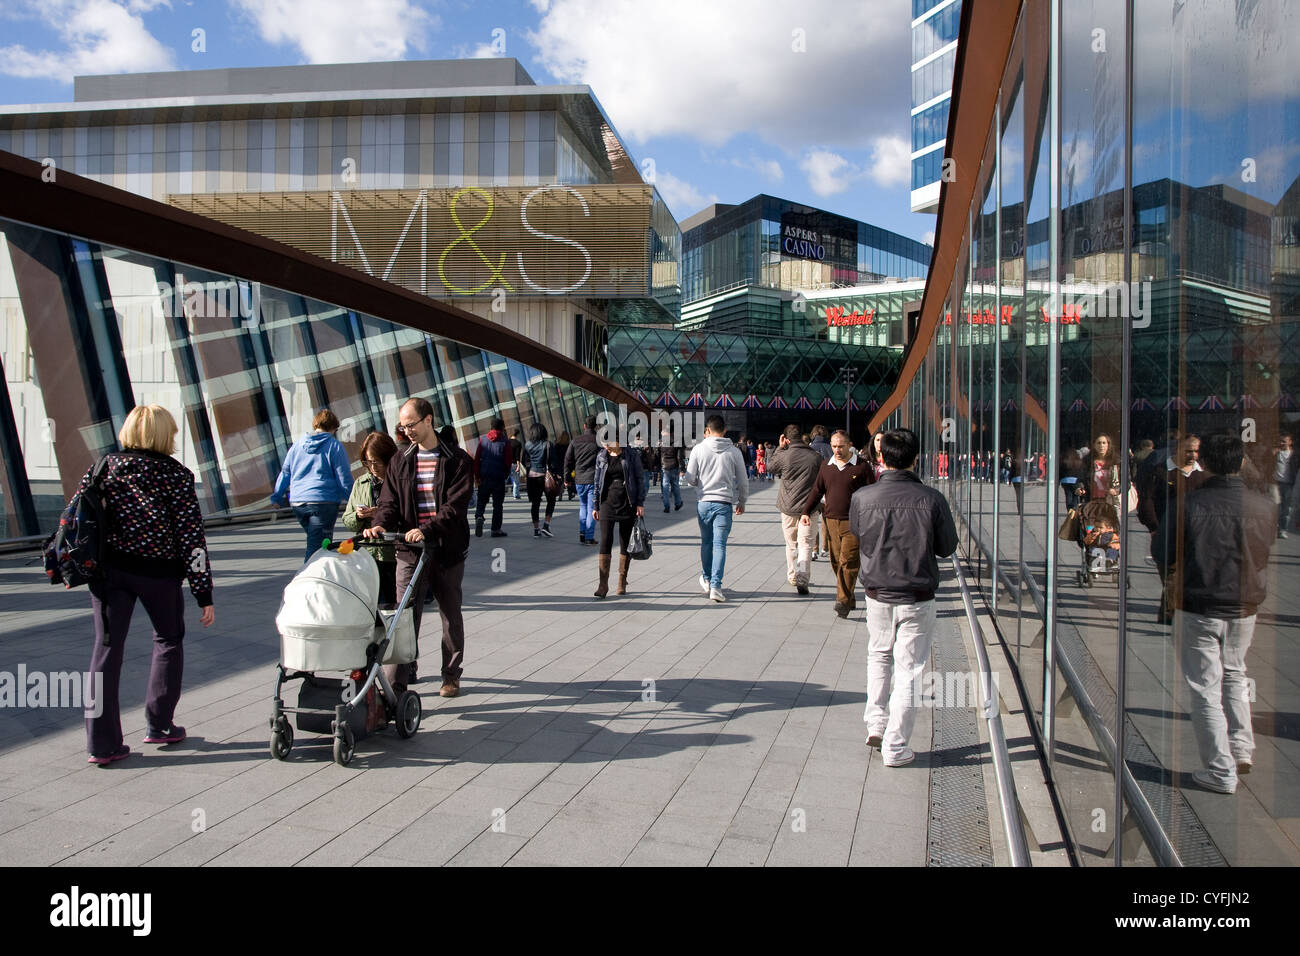 urban renewal regeneration Stratford London Stock Photo - Alamy